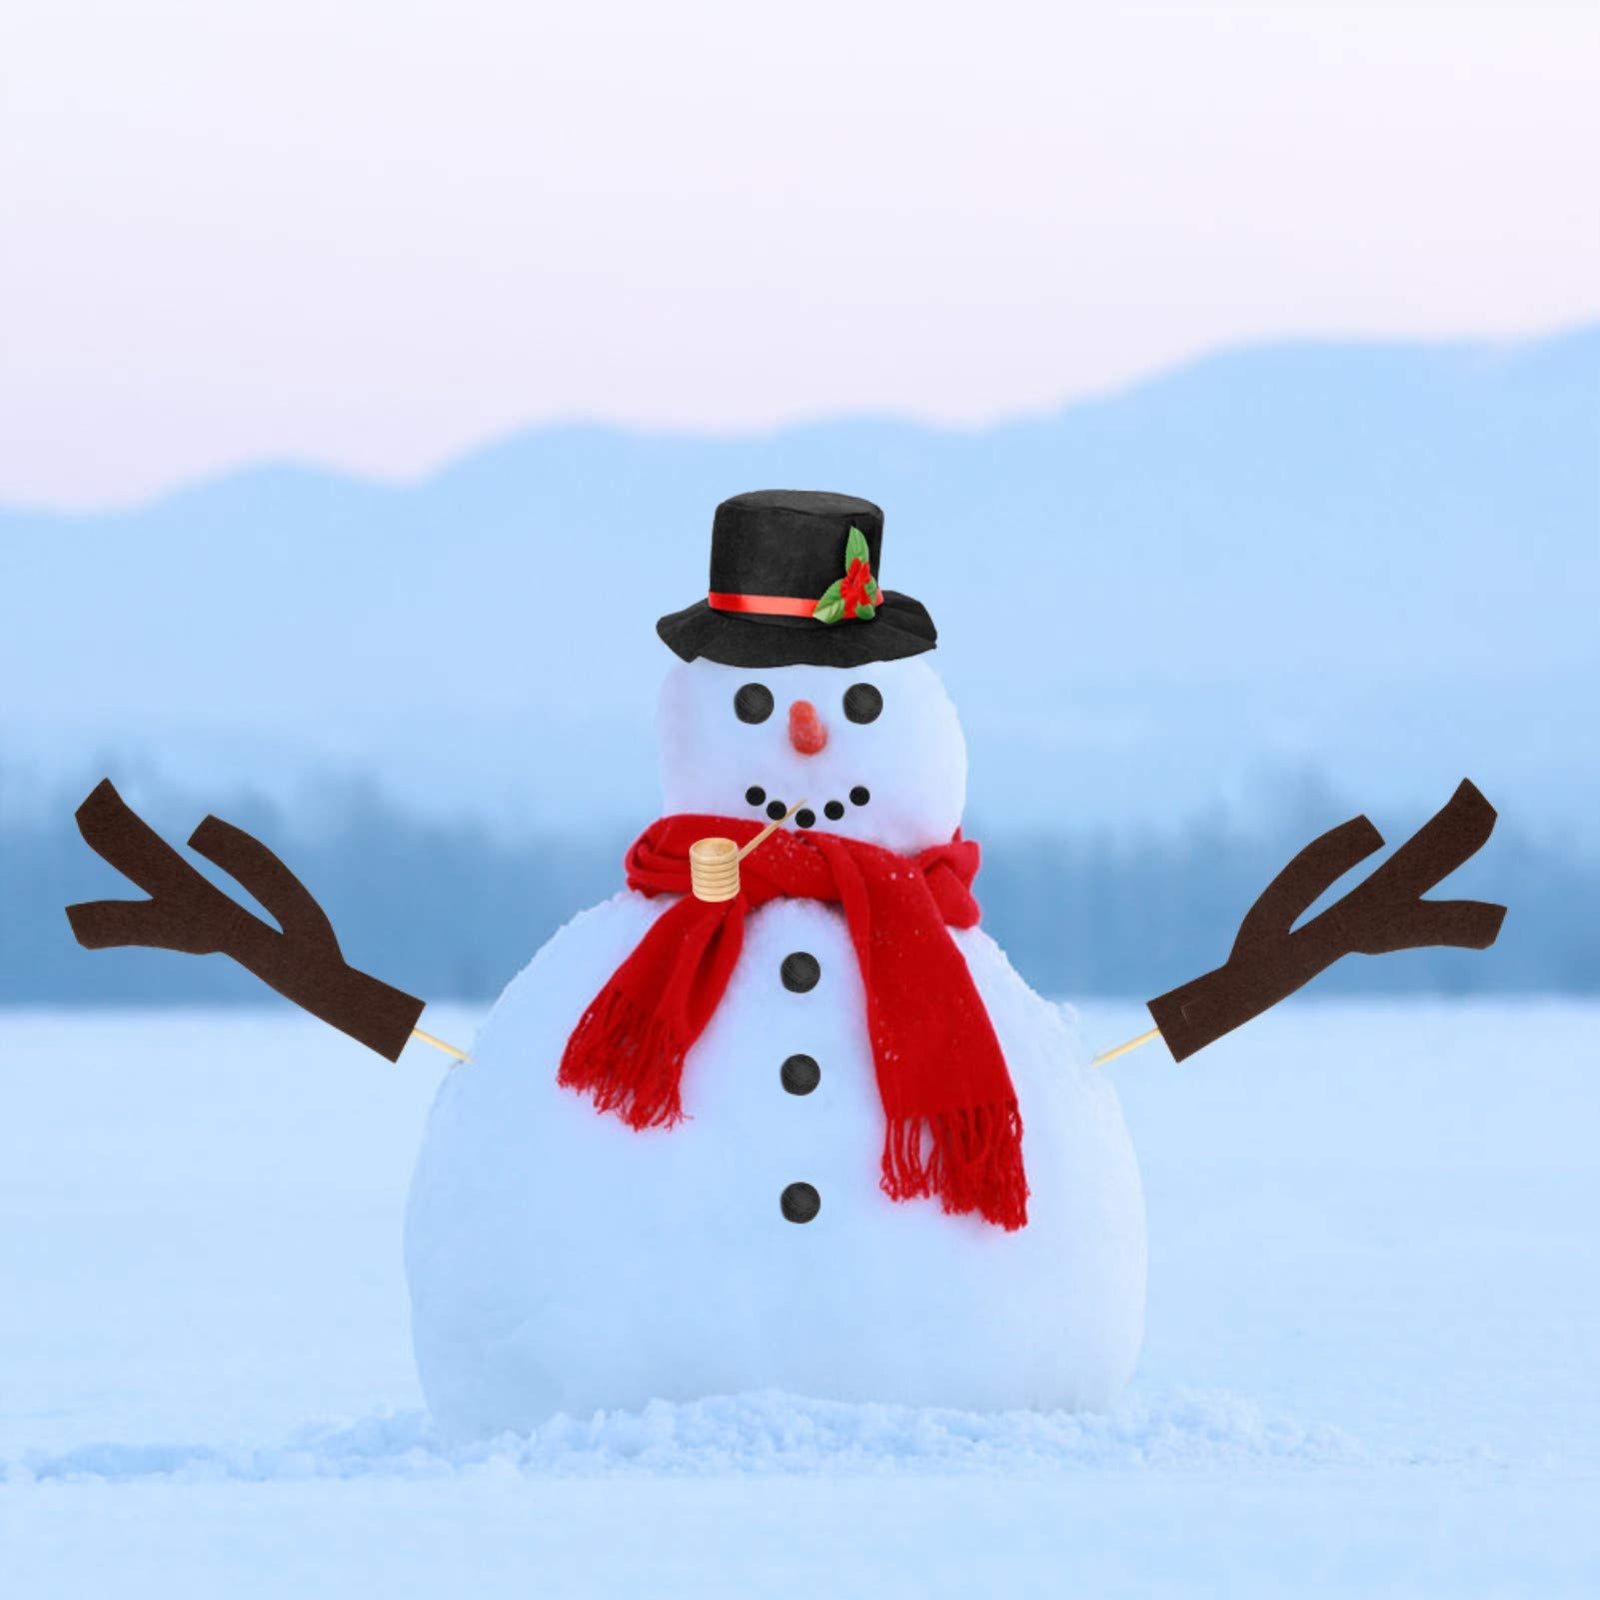 Colovis 16Pcs Snowman Decorating Kit, Snowman Making Kit Winter Party Kids Toys Christmas Holiday Decoration Gift